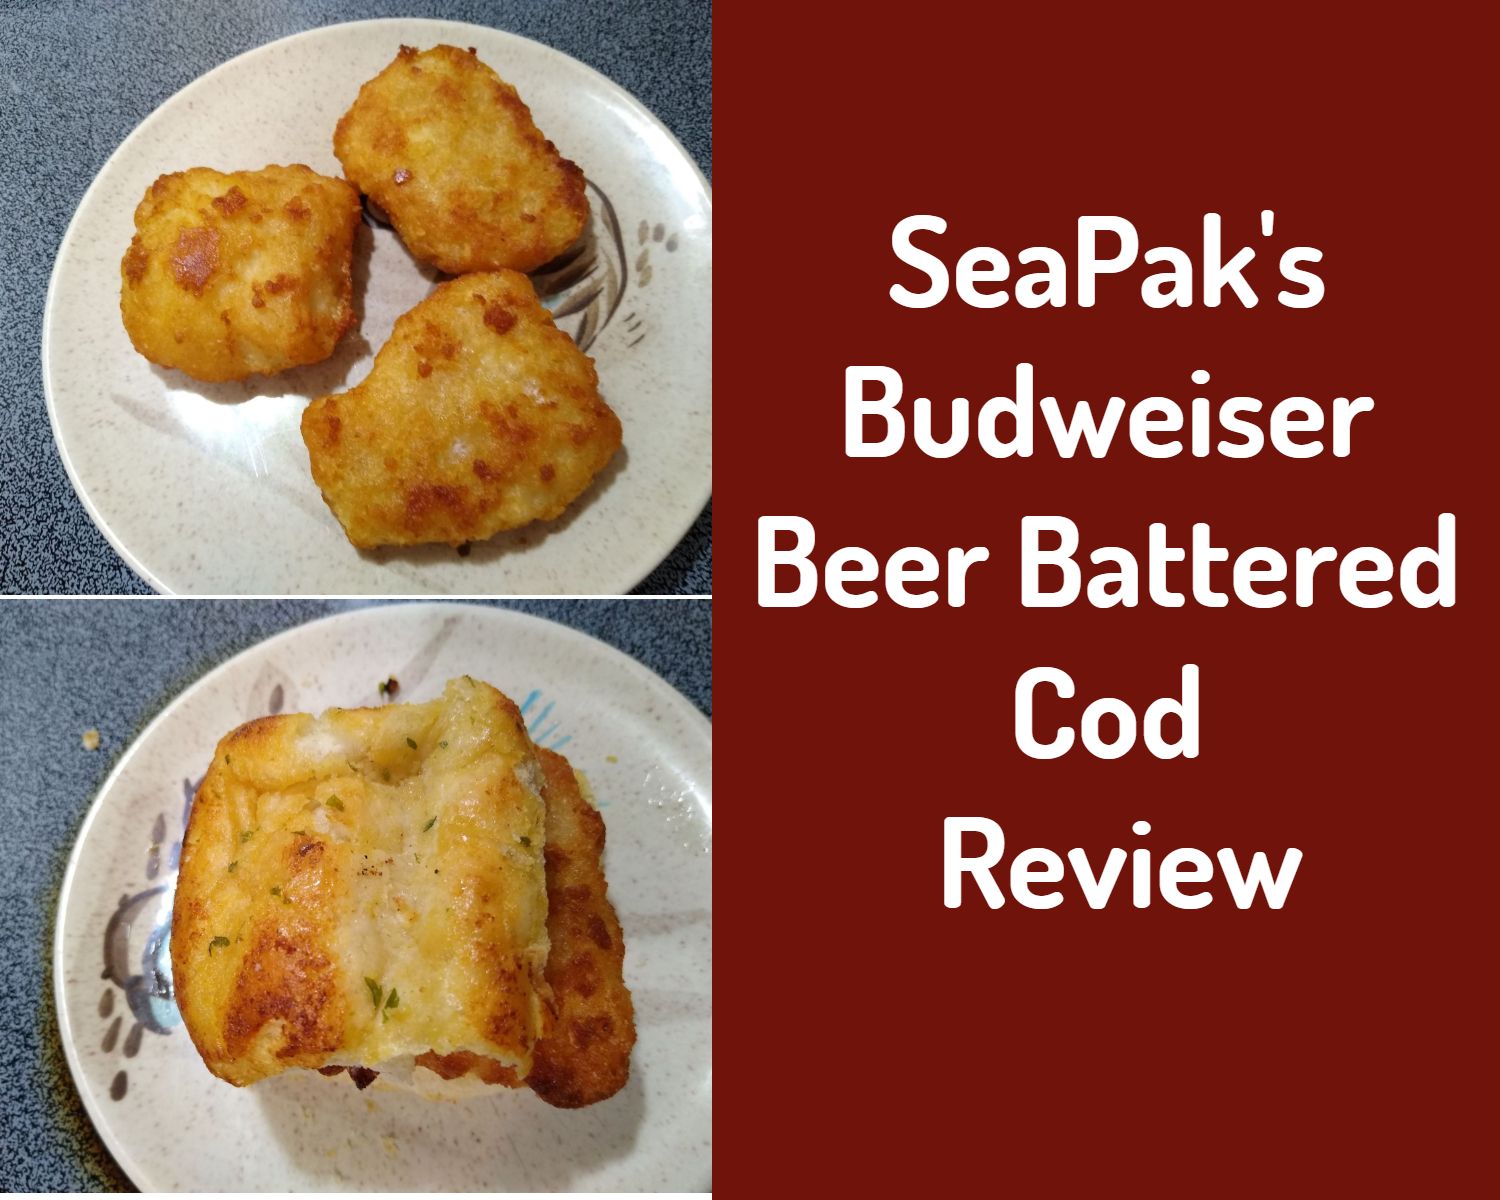 Seapak budweiser beer battered shrimp air fryer